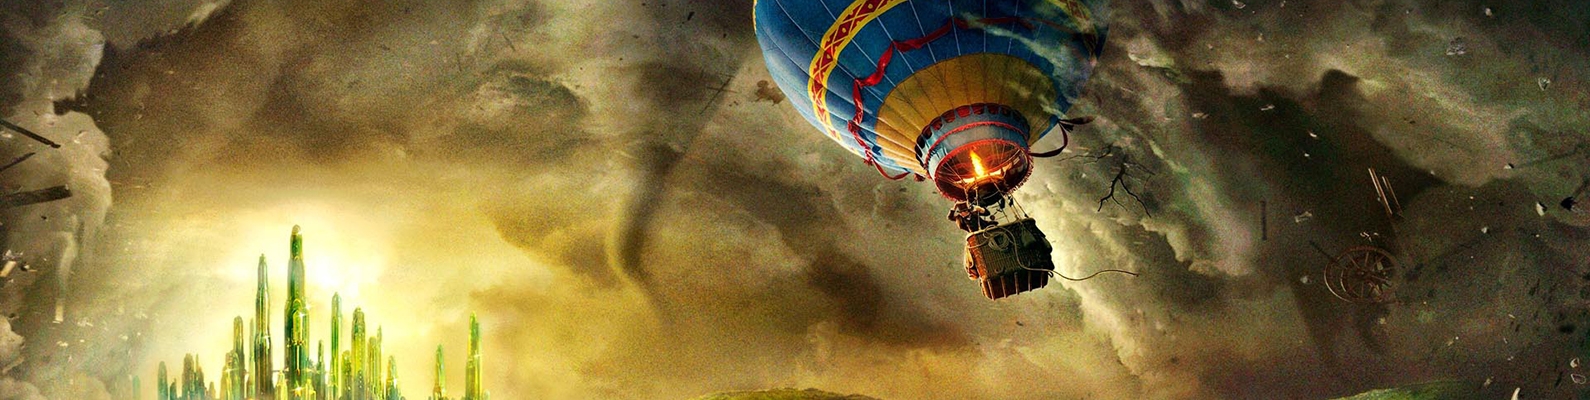 оздушный шар, James Franco, башни, обломки, Oz The Great And Powerful, смерч, надежда, полет